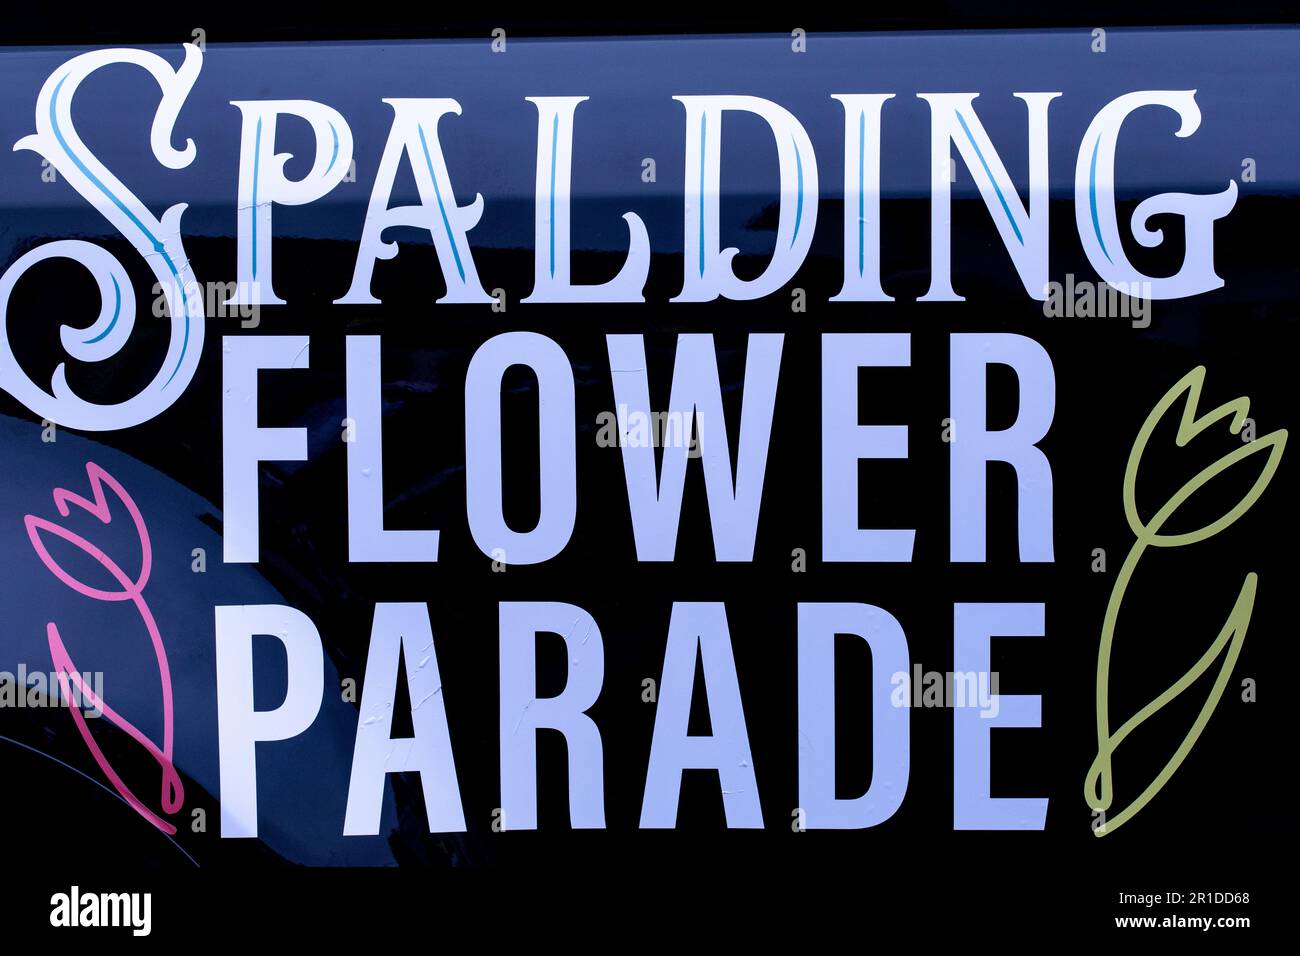 Spalding Flower parade 2023 Stock Photo